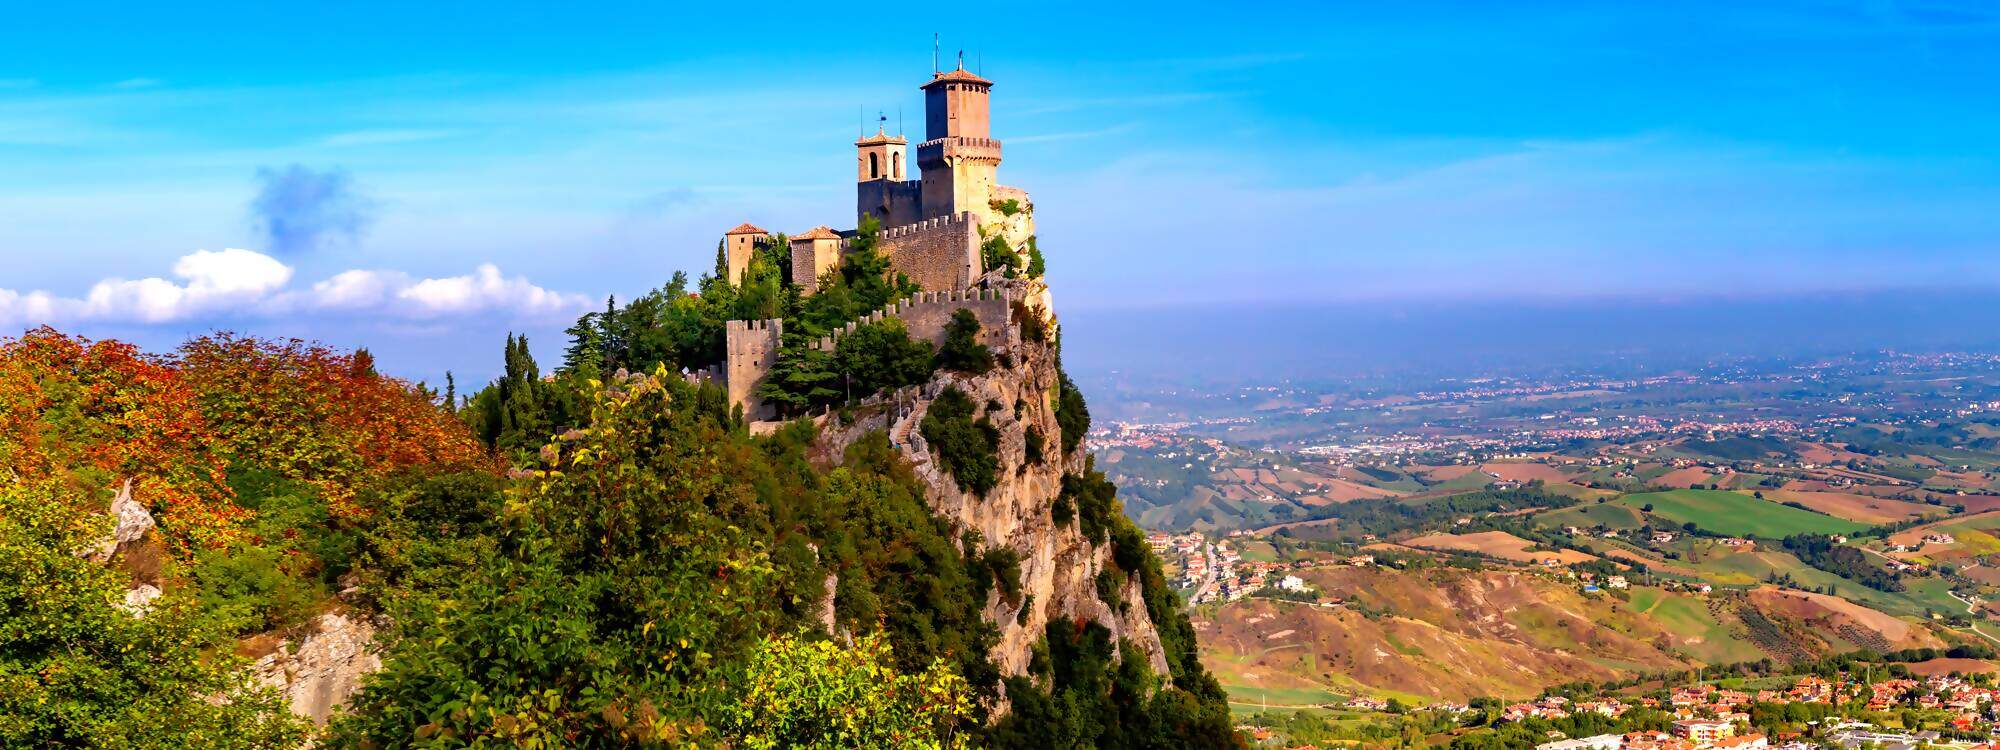 Panoramablick dese ersten Turms der Festung Guaita in der Stadt San Marino - der Republik San Marino